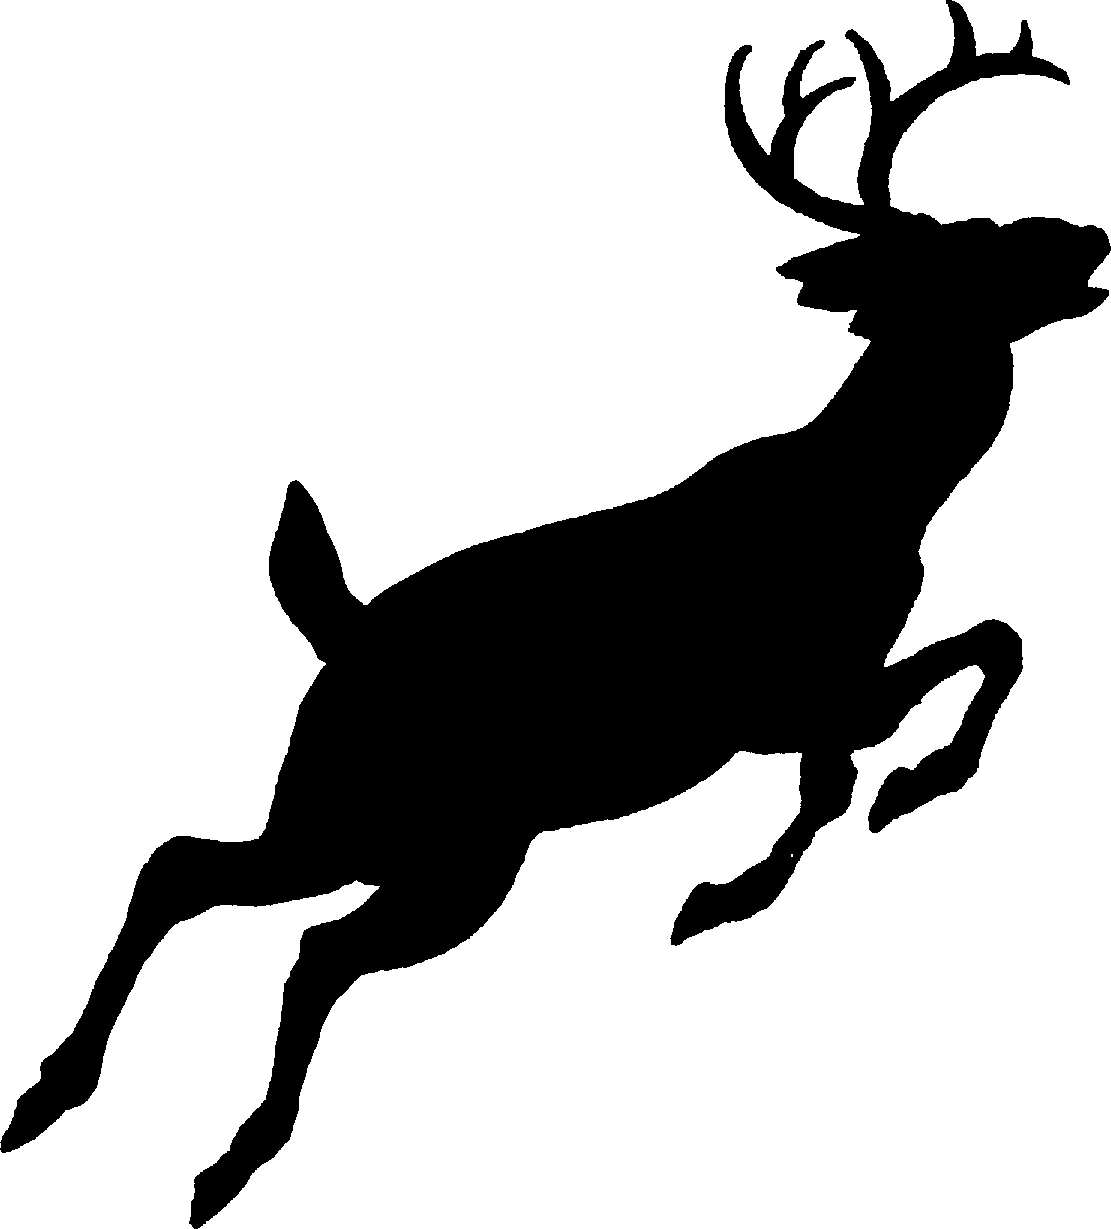 Deer silhouette logos clipart